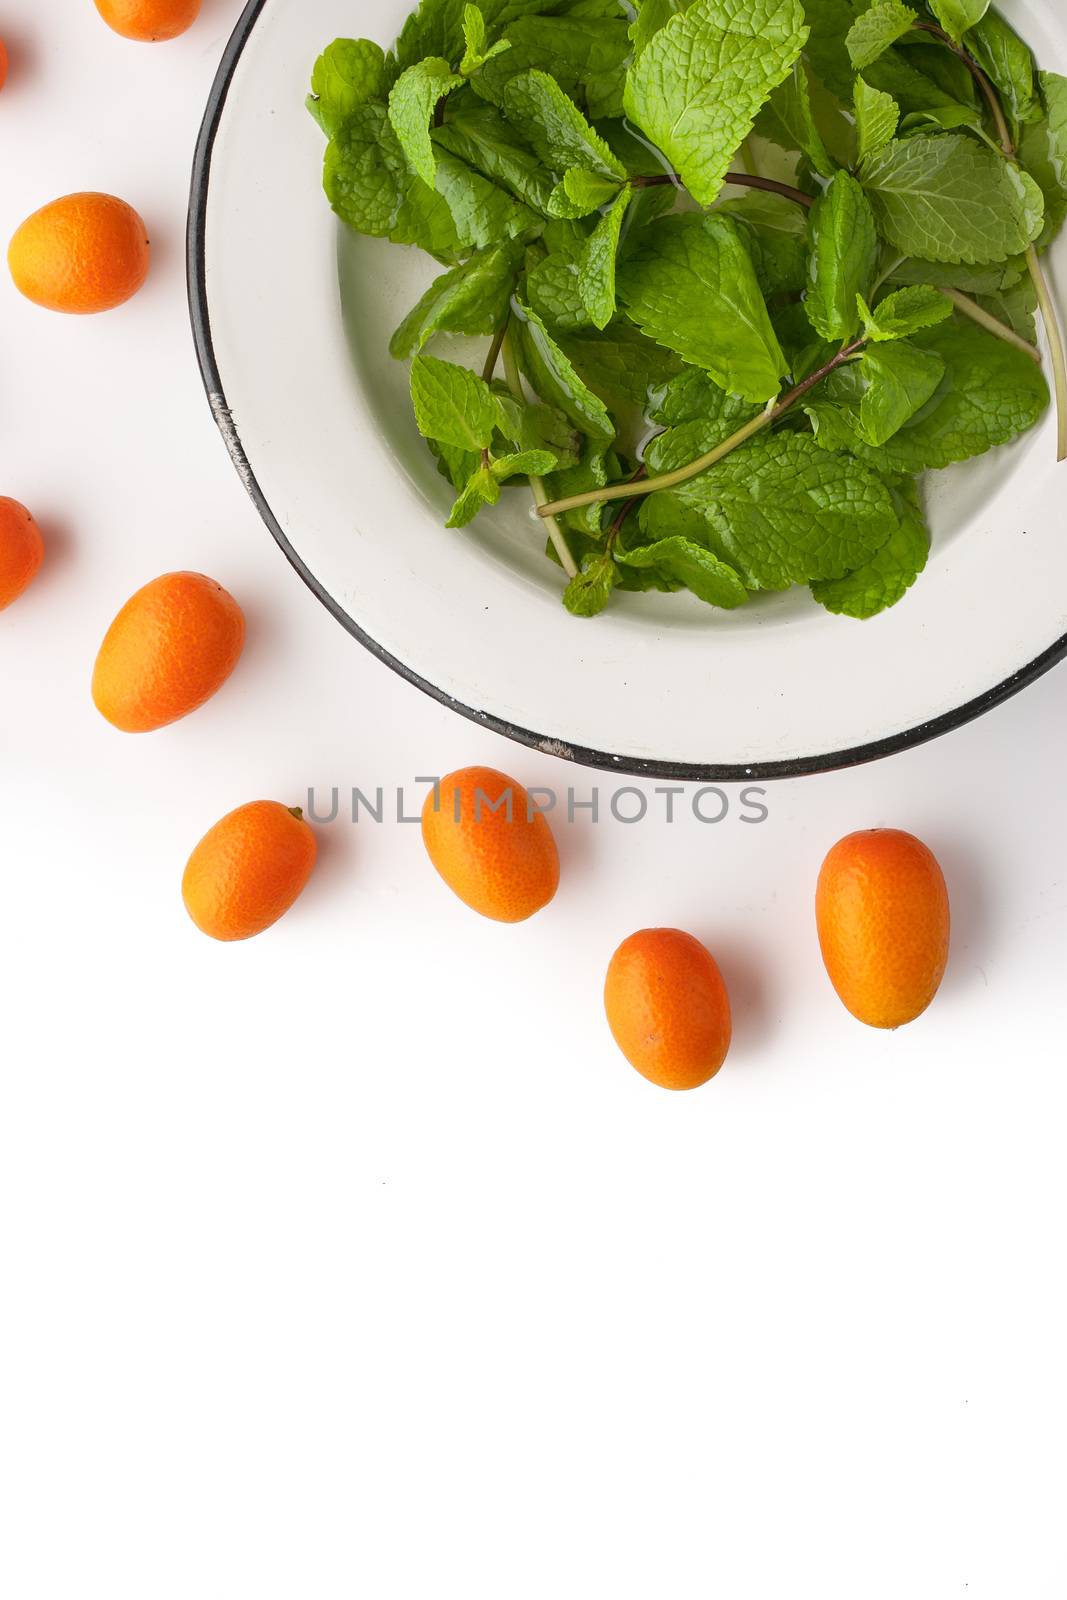 Mint with kumquat on the white background by Deniskarpenkov